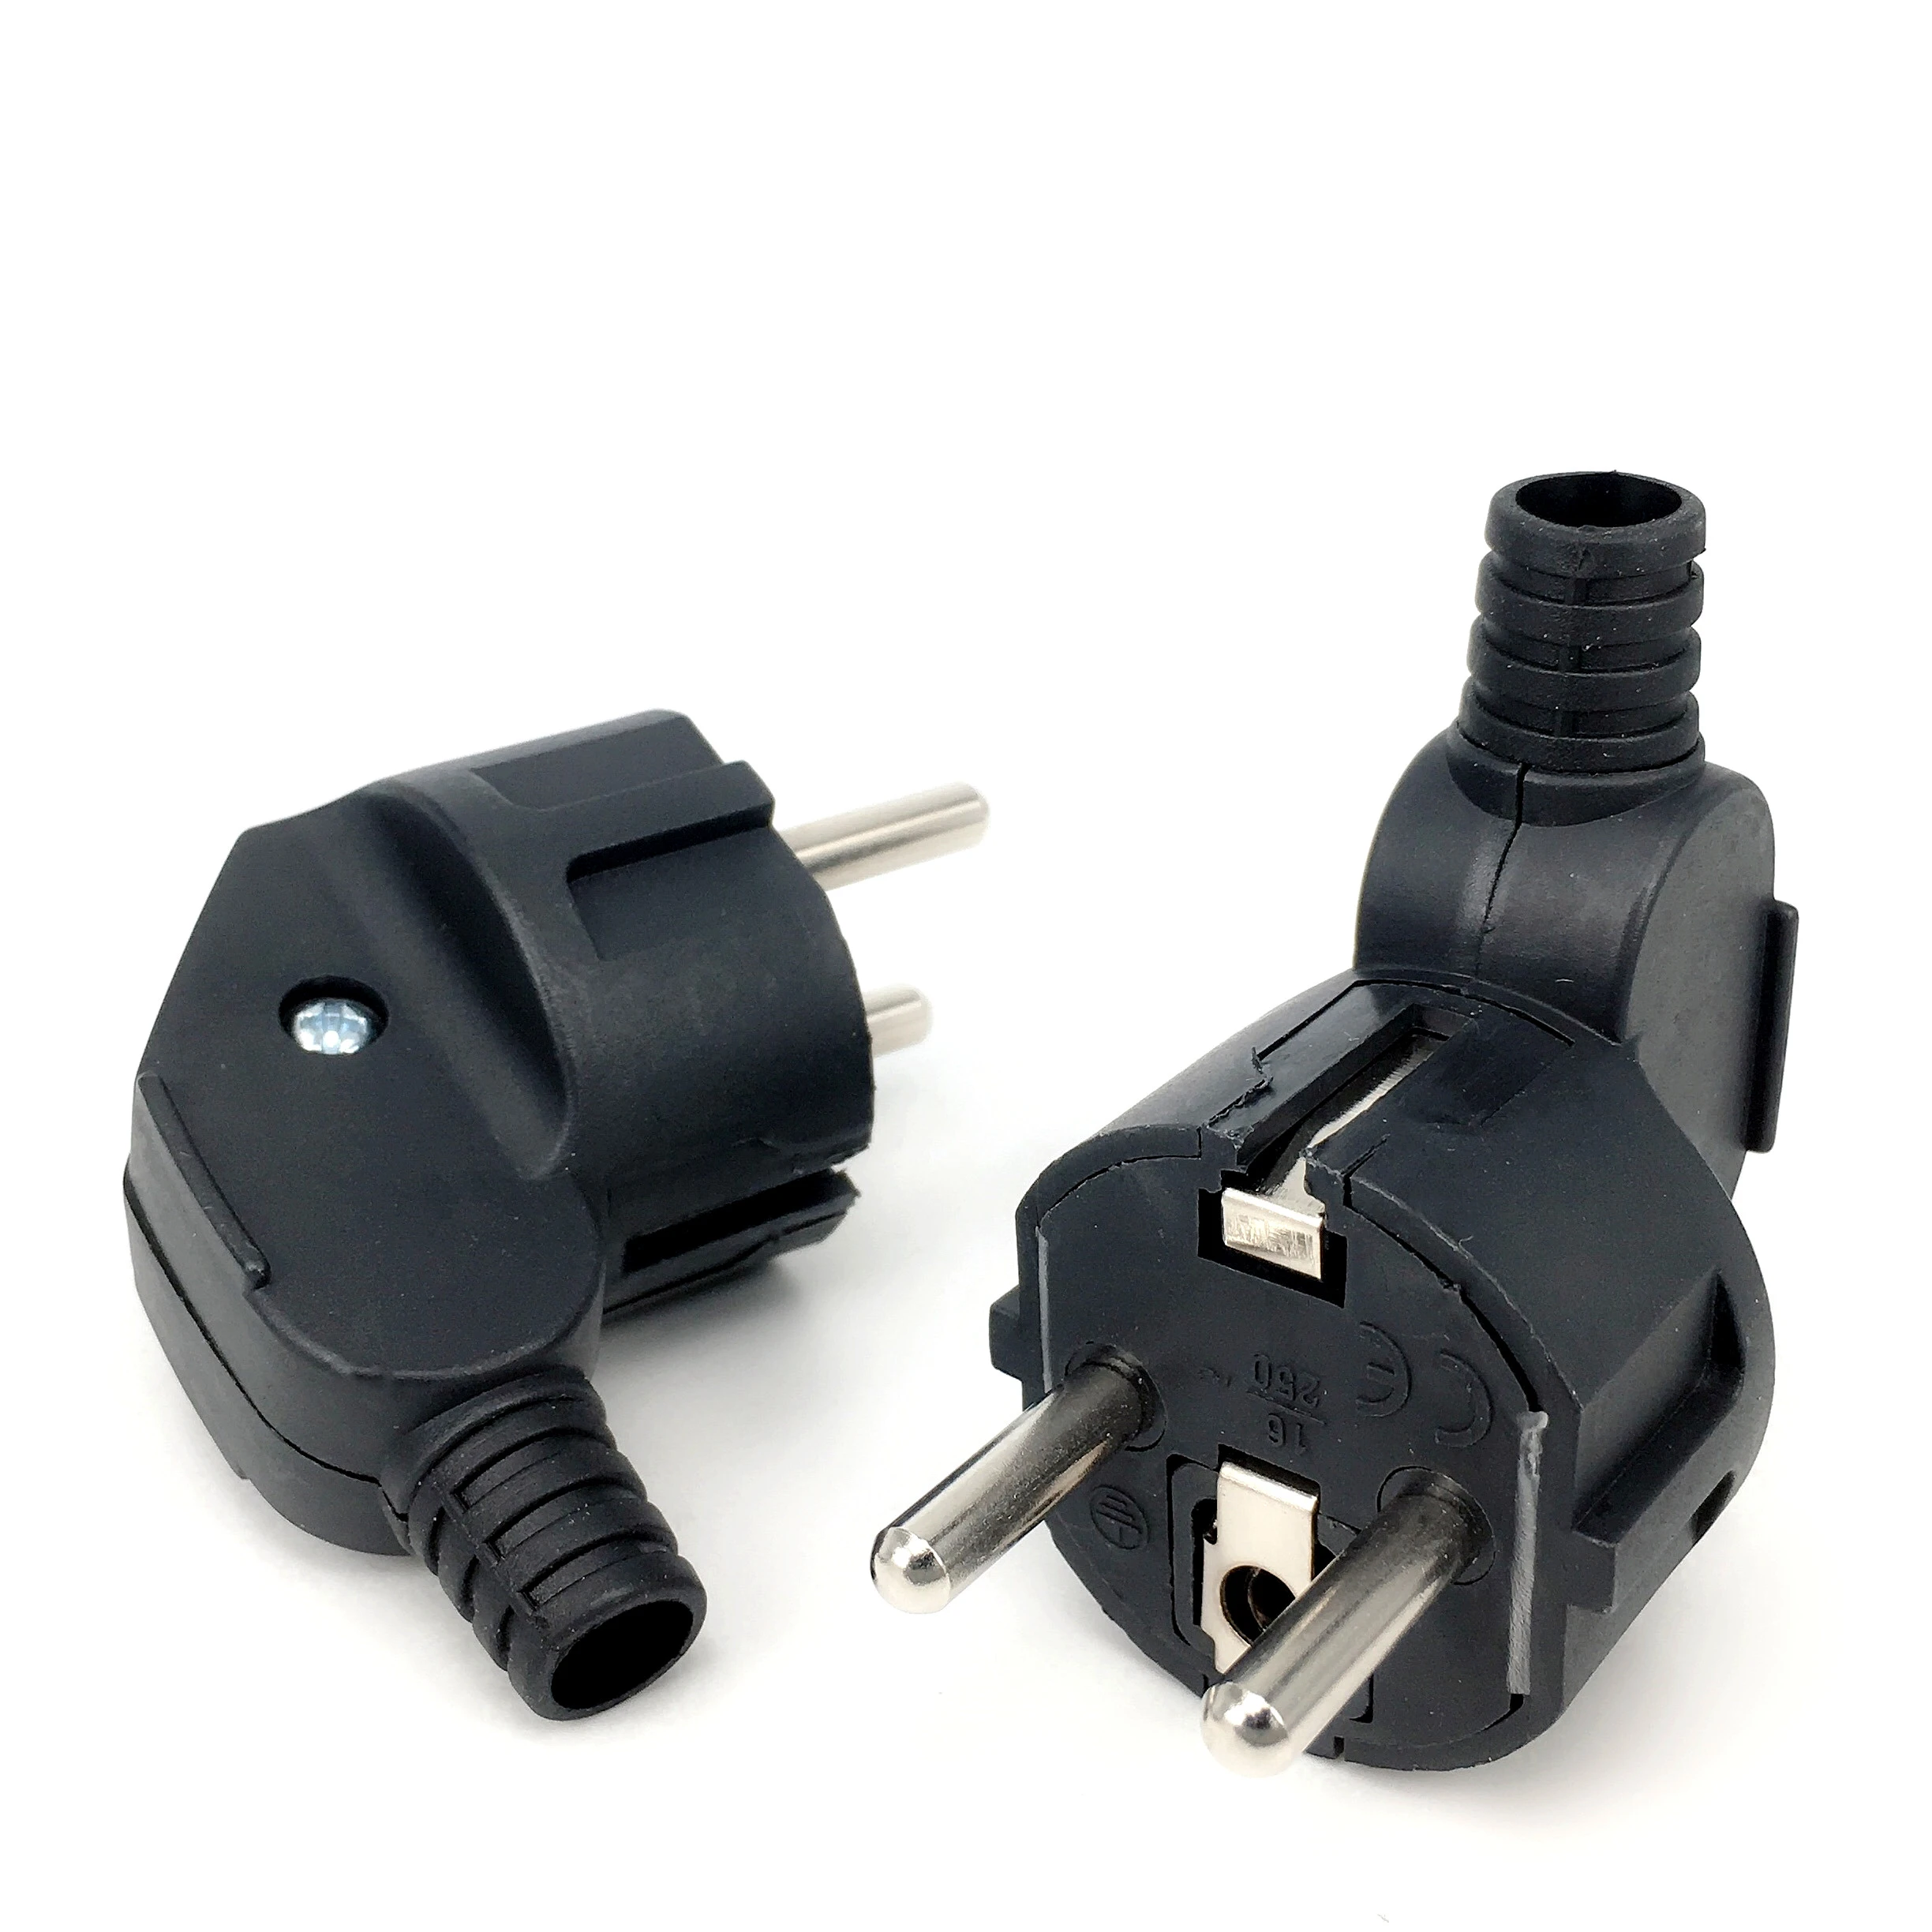 1PCS Eu AC Power Adapter Socket 16A 250V Connector Cable Electrical Plug White Black Male Converter Adaptor Detachable Plug